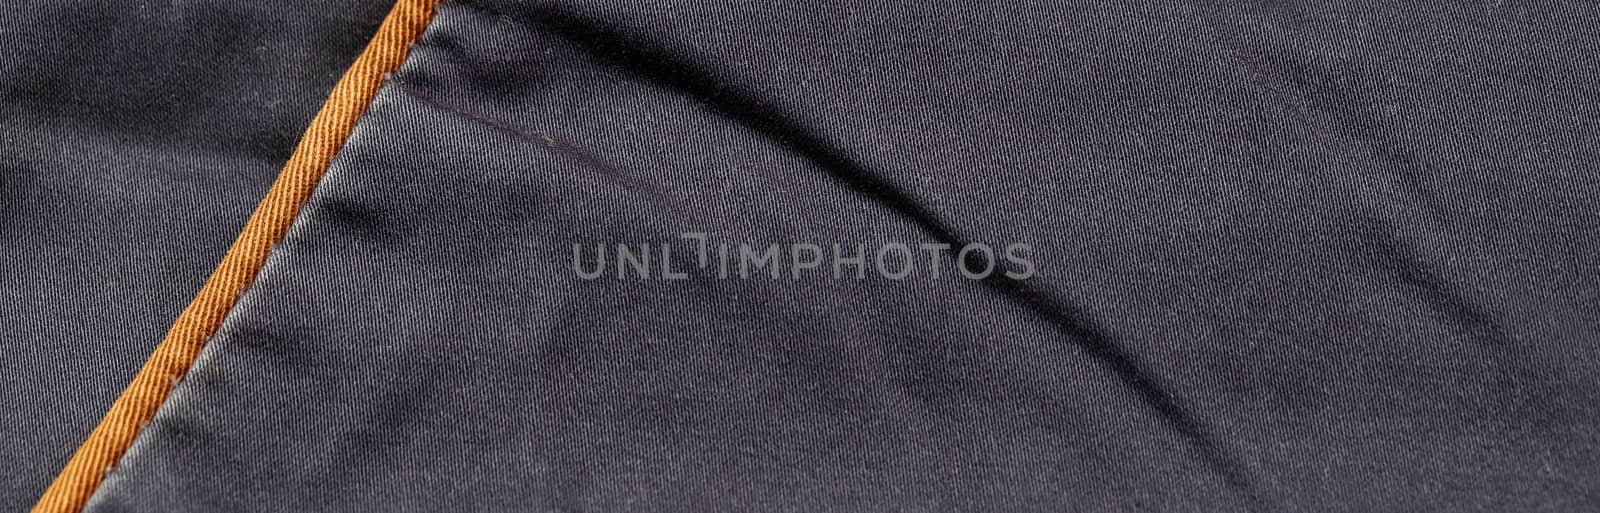 Close-up of blue denim texture. Denim jeans background by bonilook